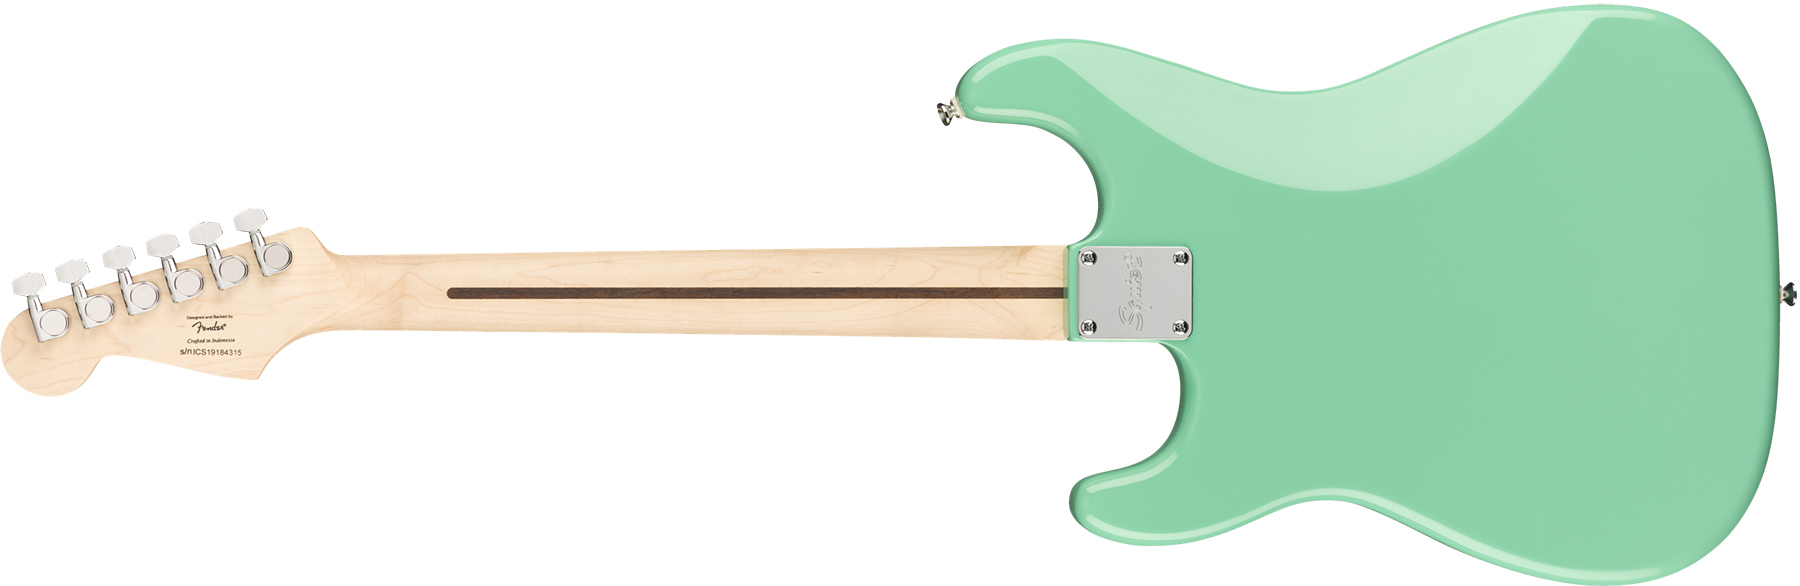 Squier Strat Bullet Fsr Ltd Hss Ht Lau - Sea Foam Green - Guitarra eléctrica con forma de str. - Variation 1